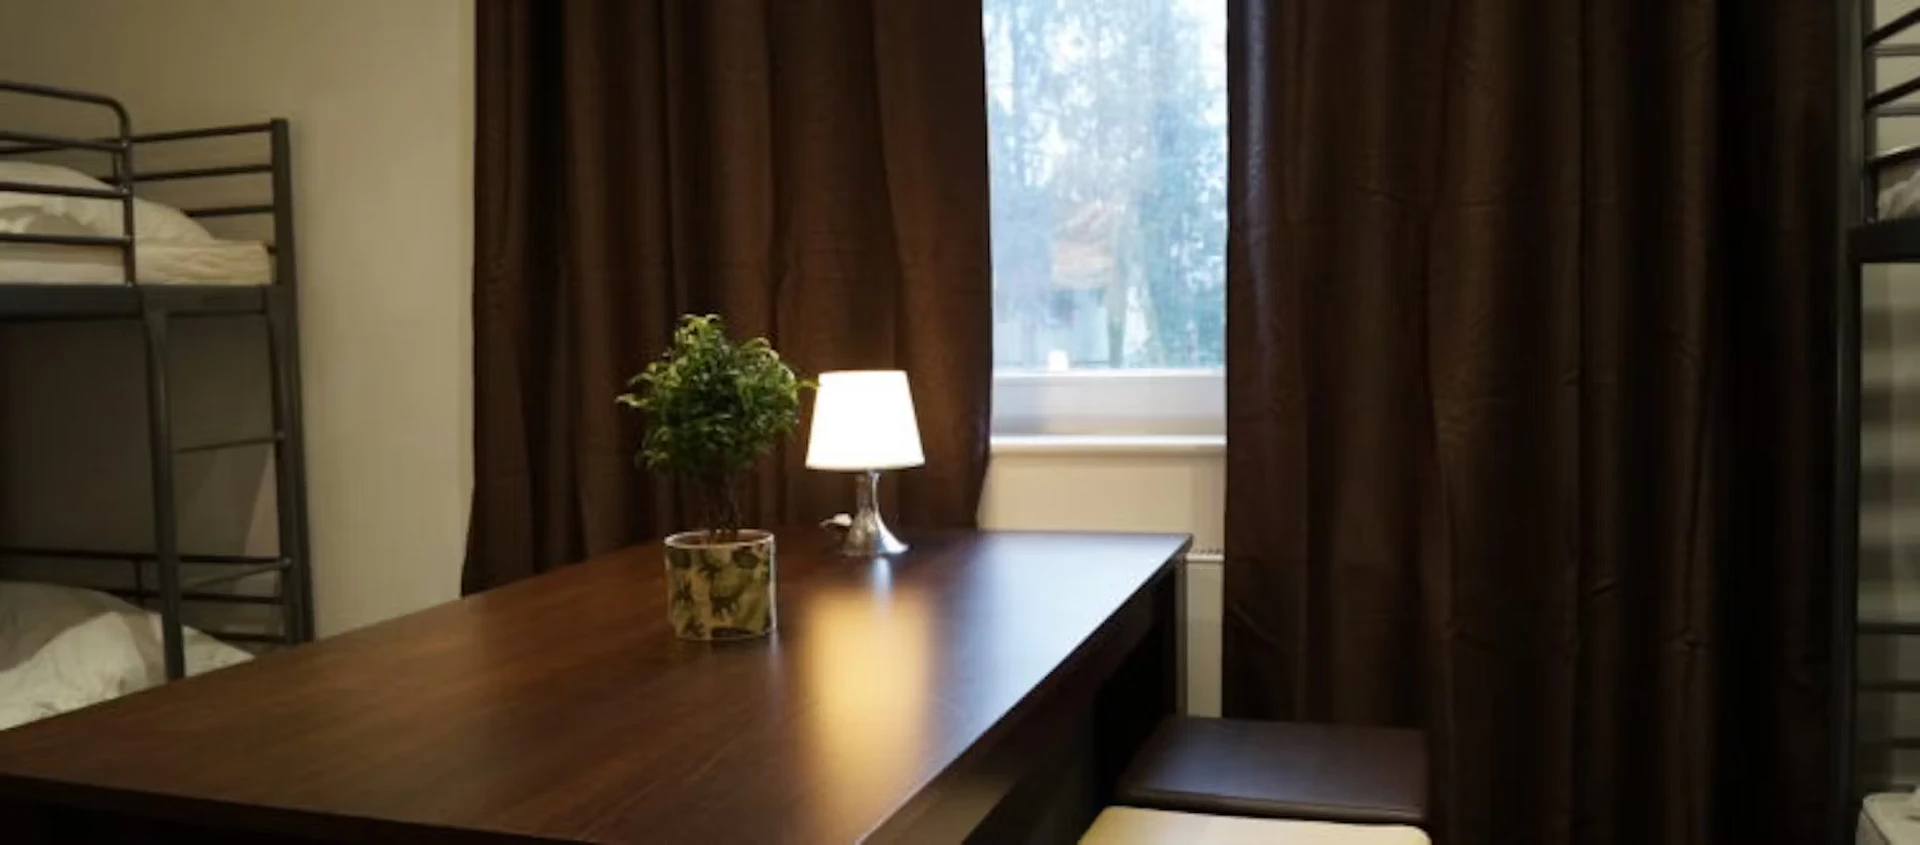 Shared room in 3-bedroom flat Berlin